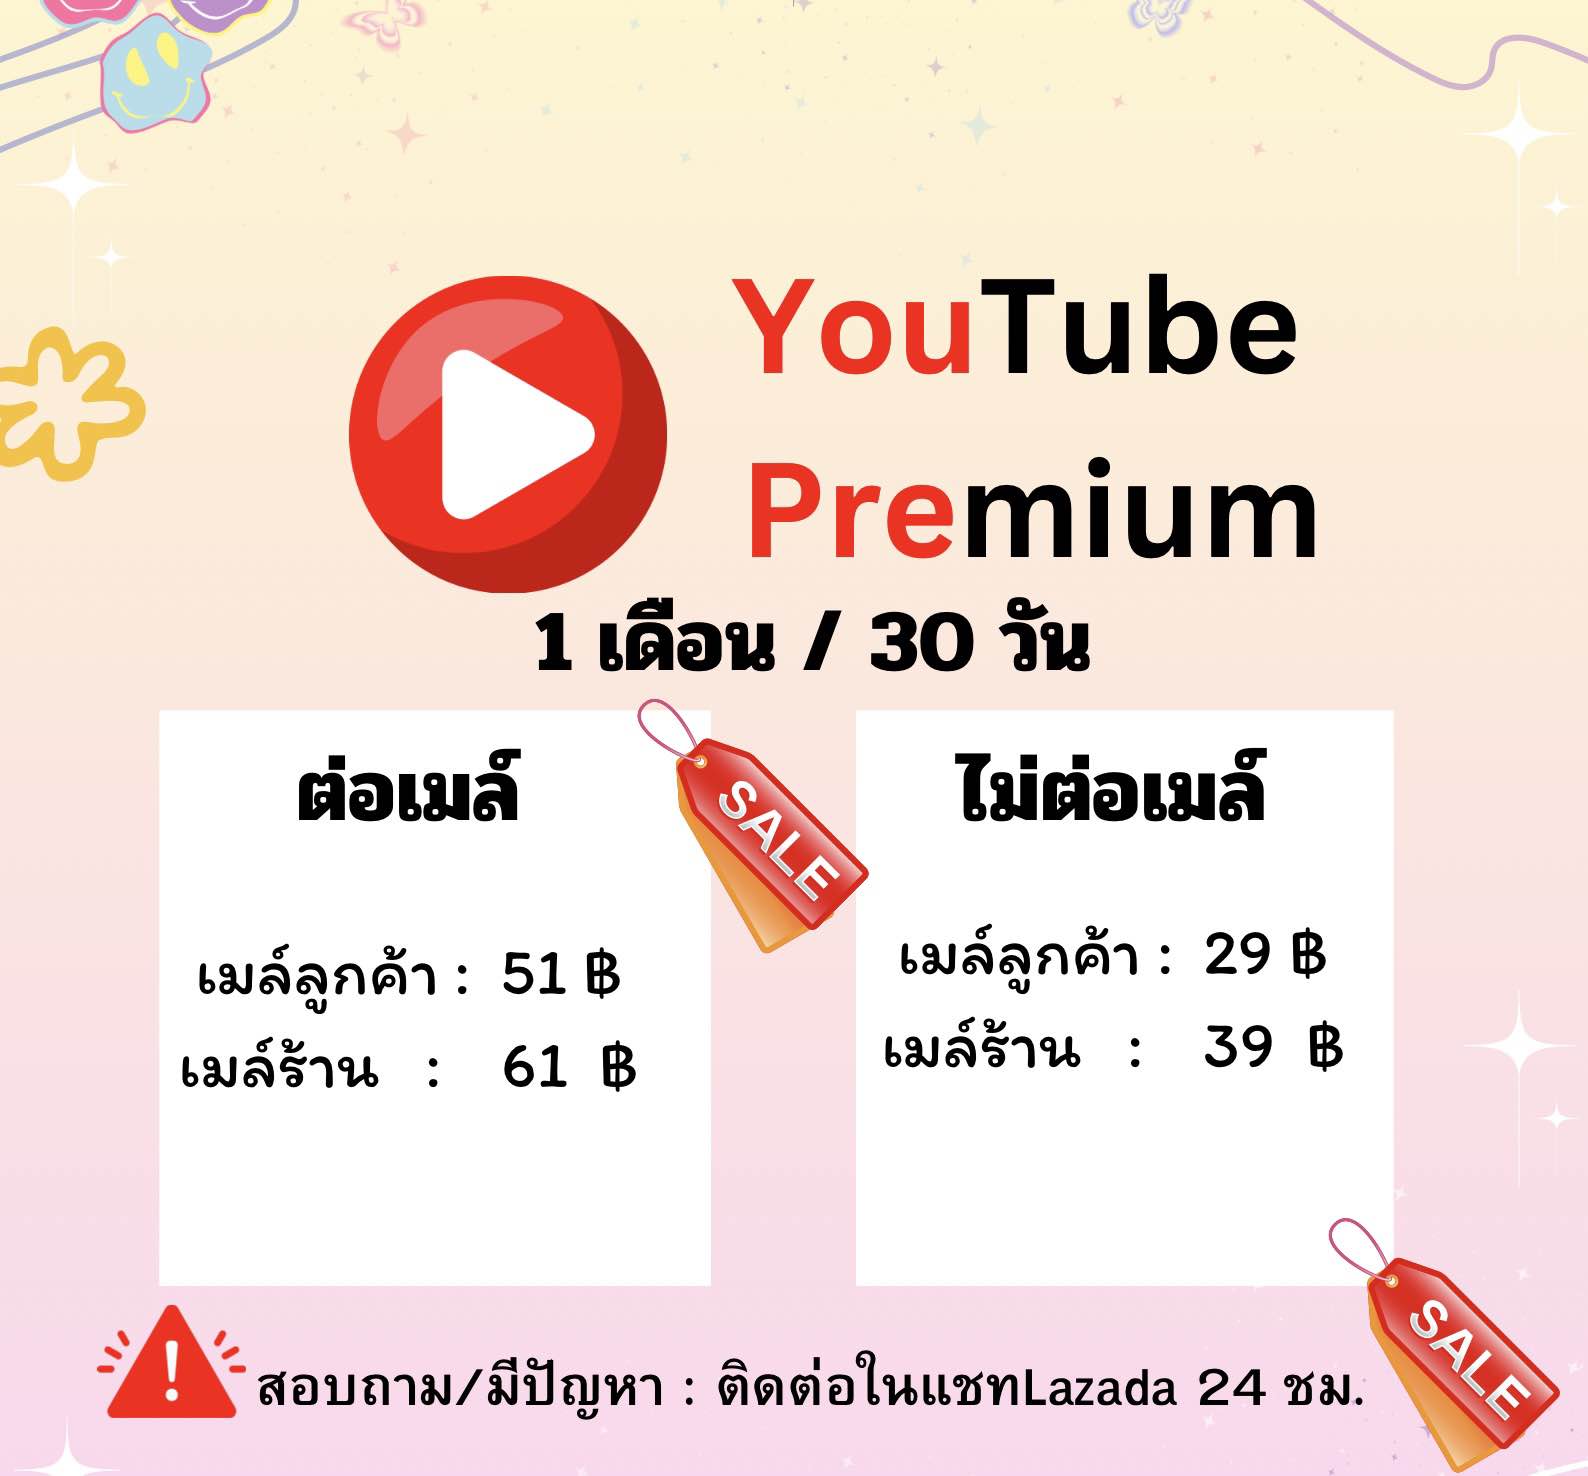 Gói YouTube Premium 1 năm